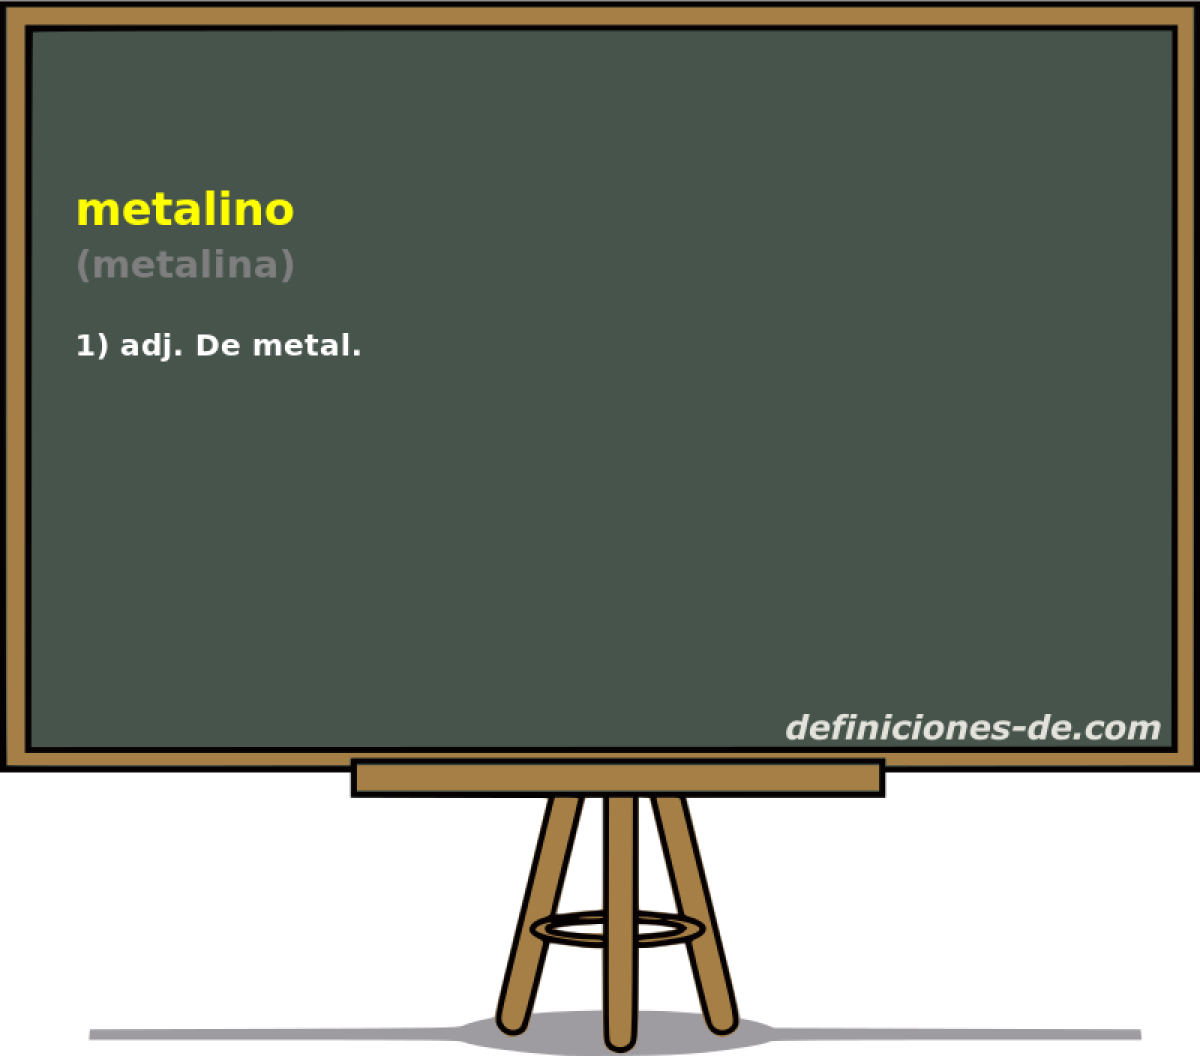 metalino (metalina)